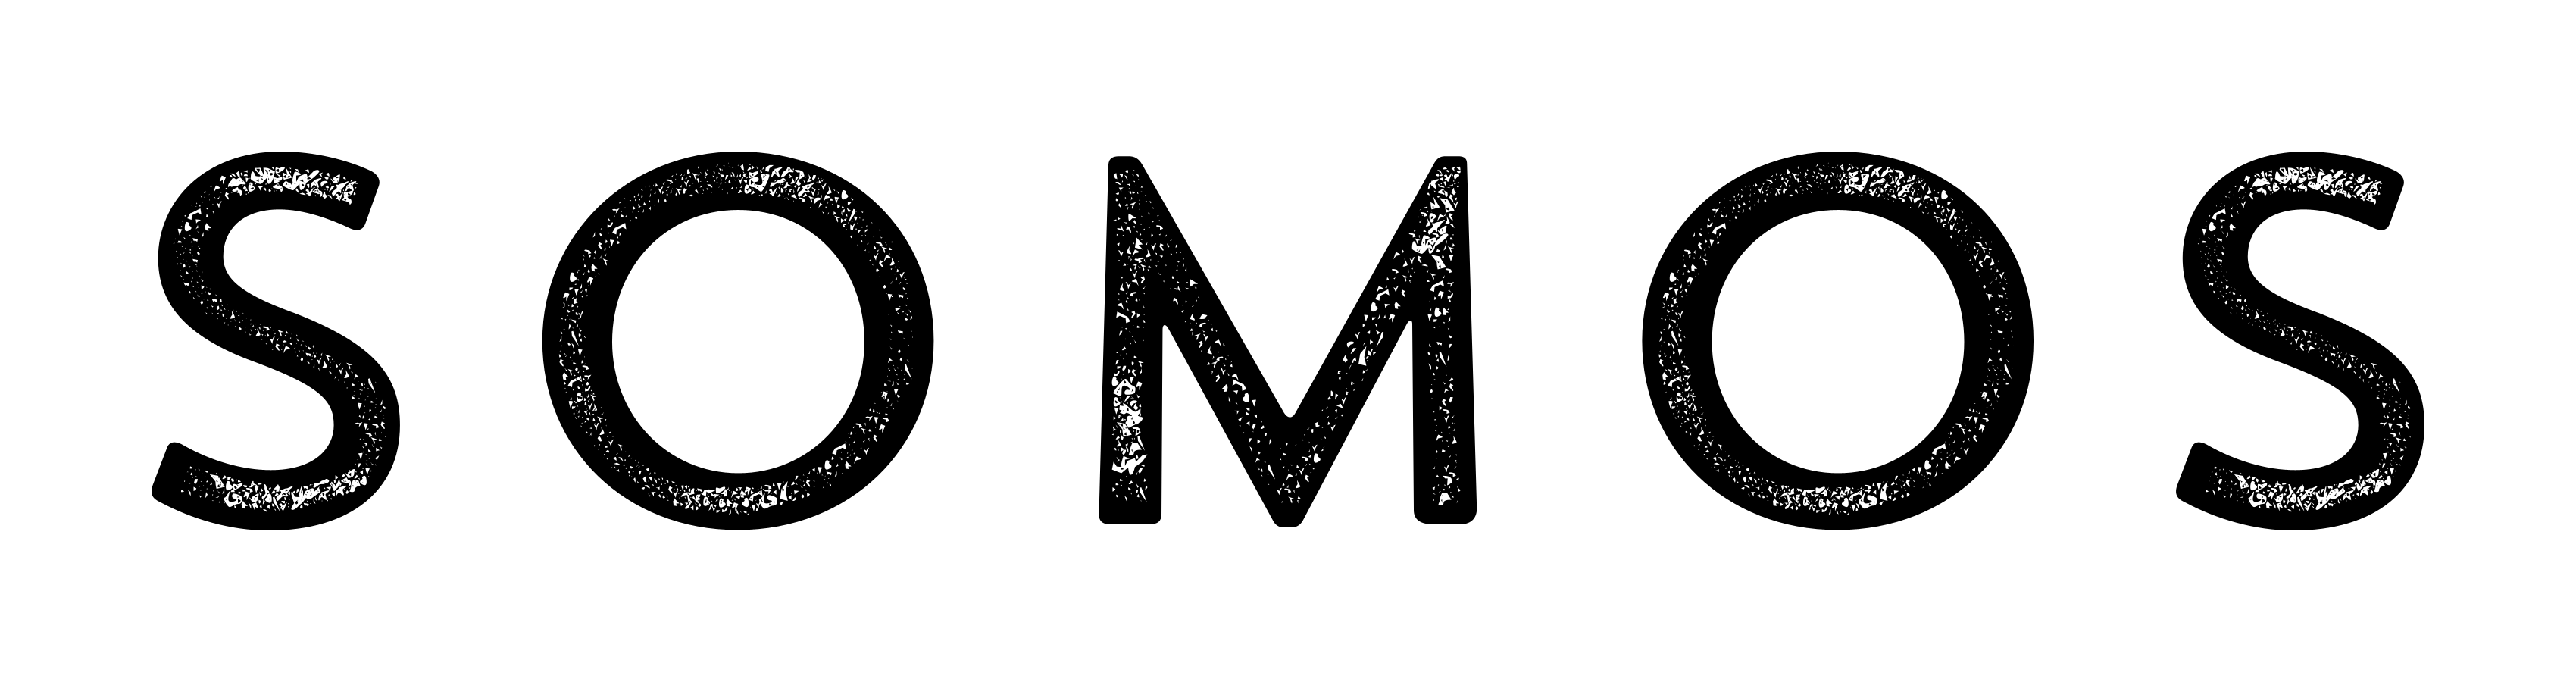 Black logo   transparent   (3400x900)